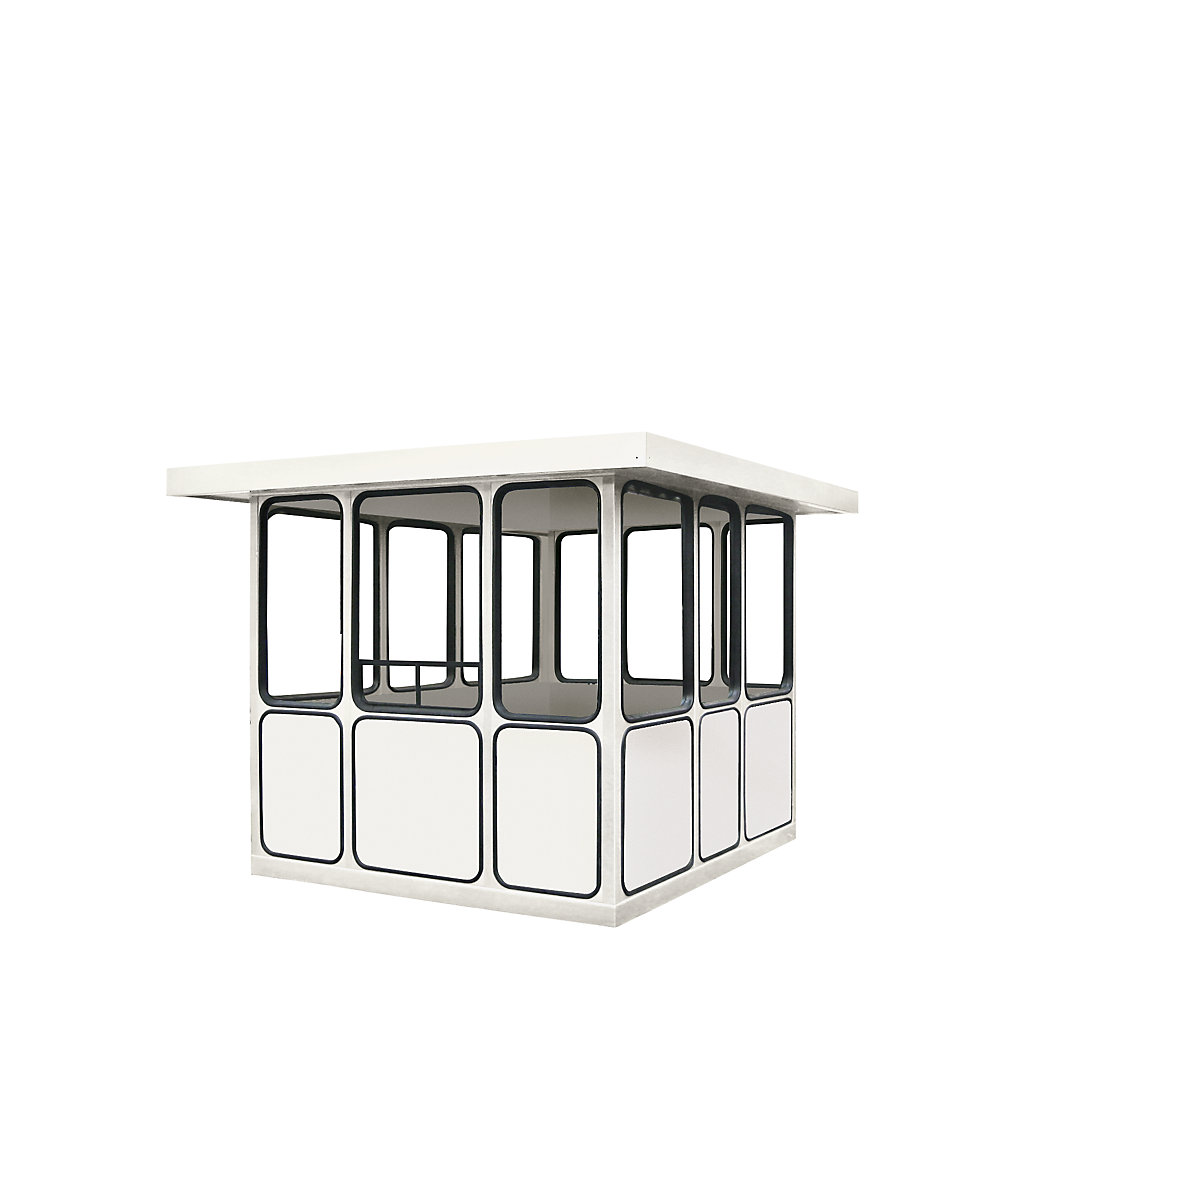 Caseta multiusos, paneles de relleno con esquinas redondeadas (Imagen del producto 2)-1